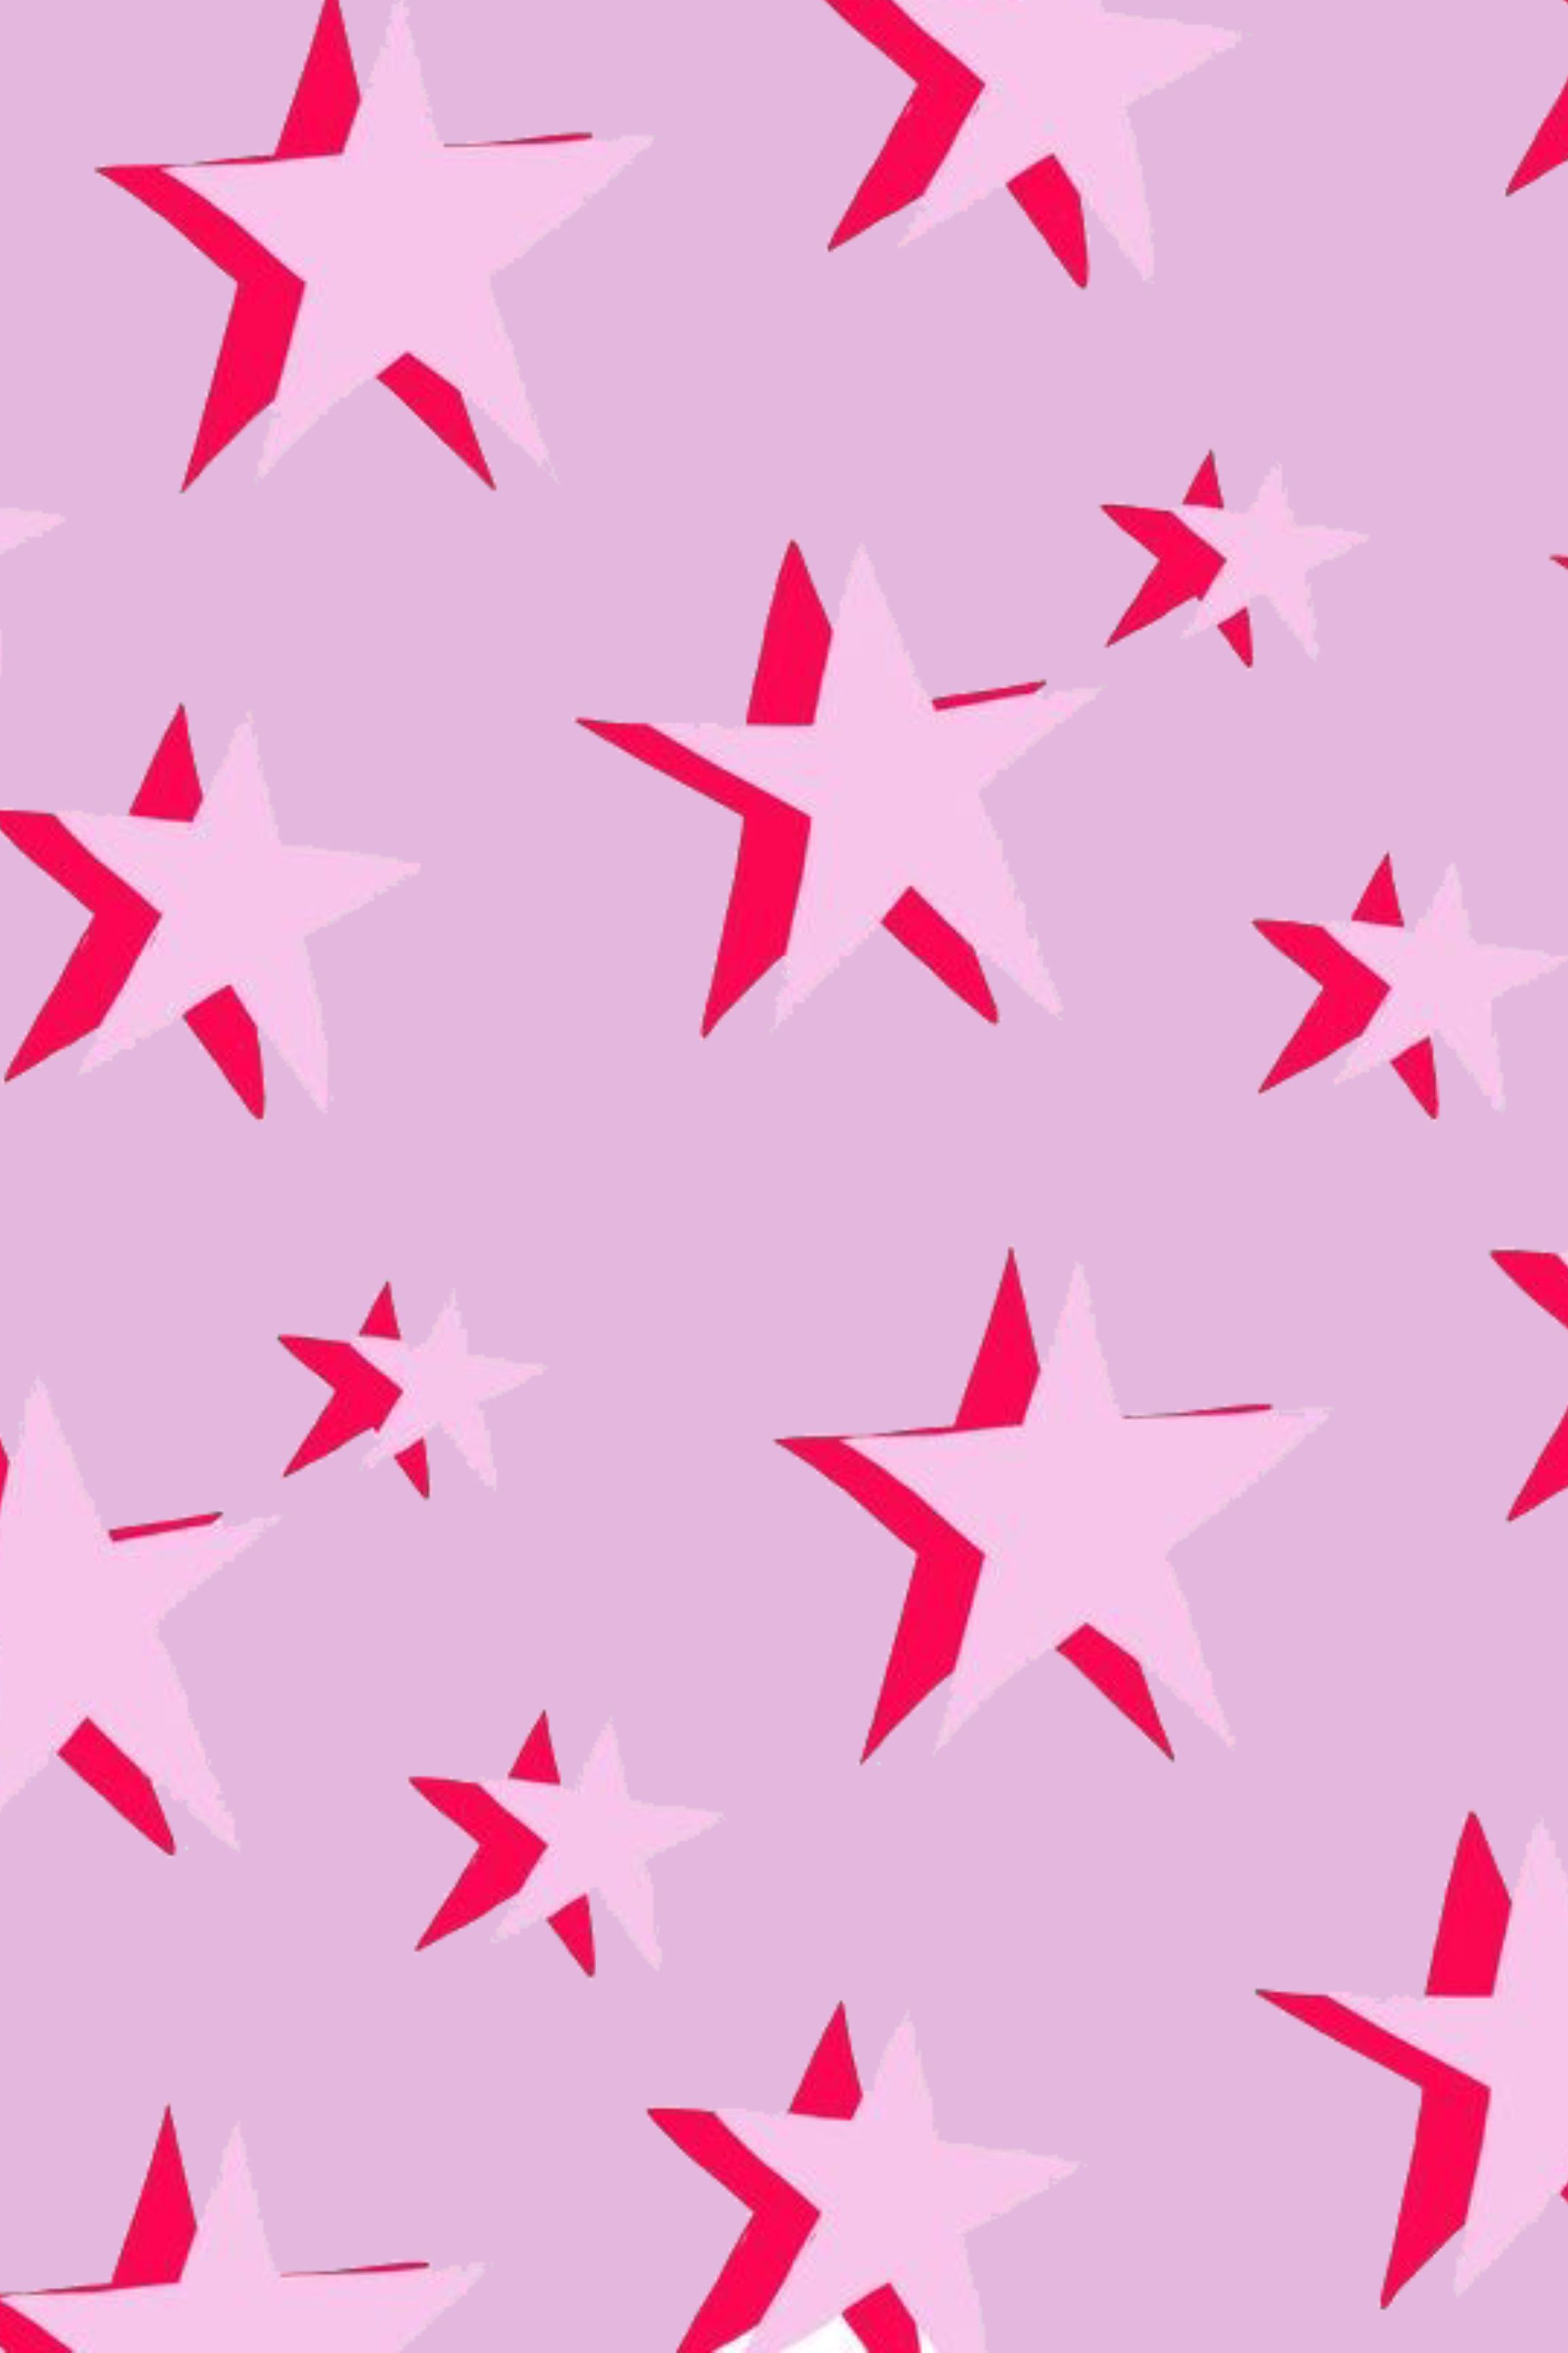 Best 100 Preppy Wallpaper  Pink Preppy Wallpaper  Preppy Wallpaper iPad   Preppy Wallpaper Smiley Face  Preppy Wallpaper Aesthetic  Mixing  Images